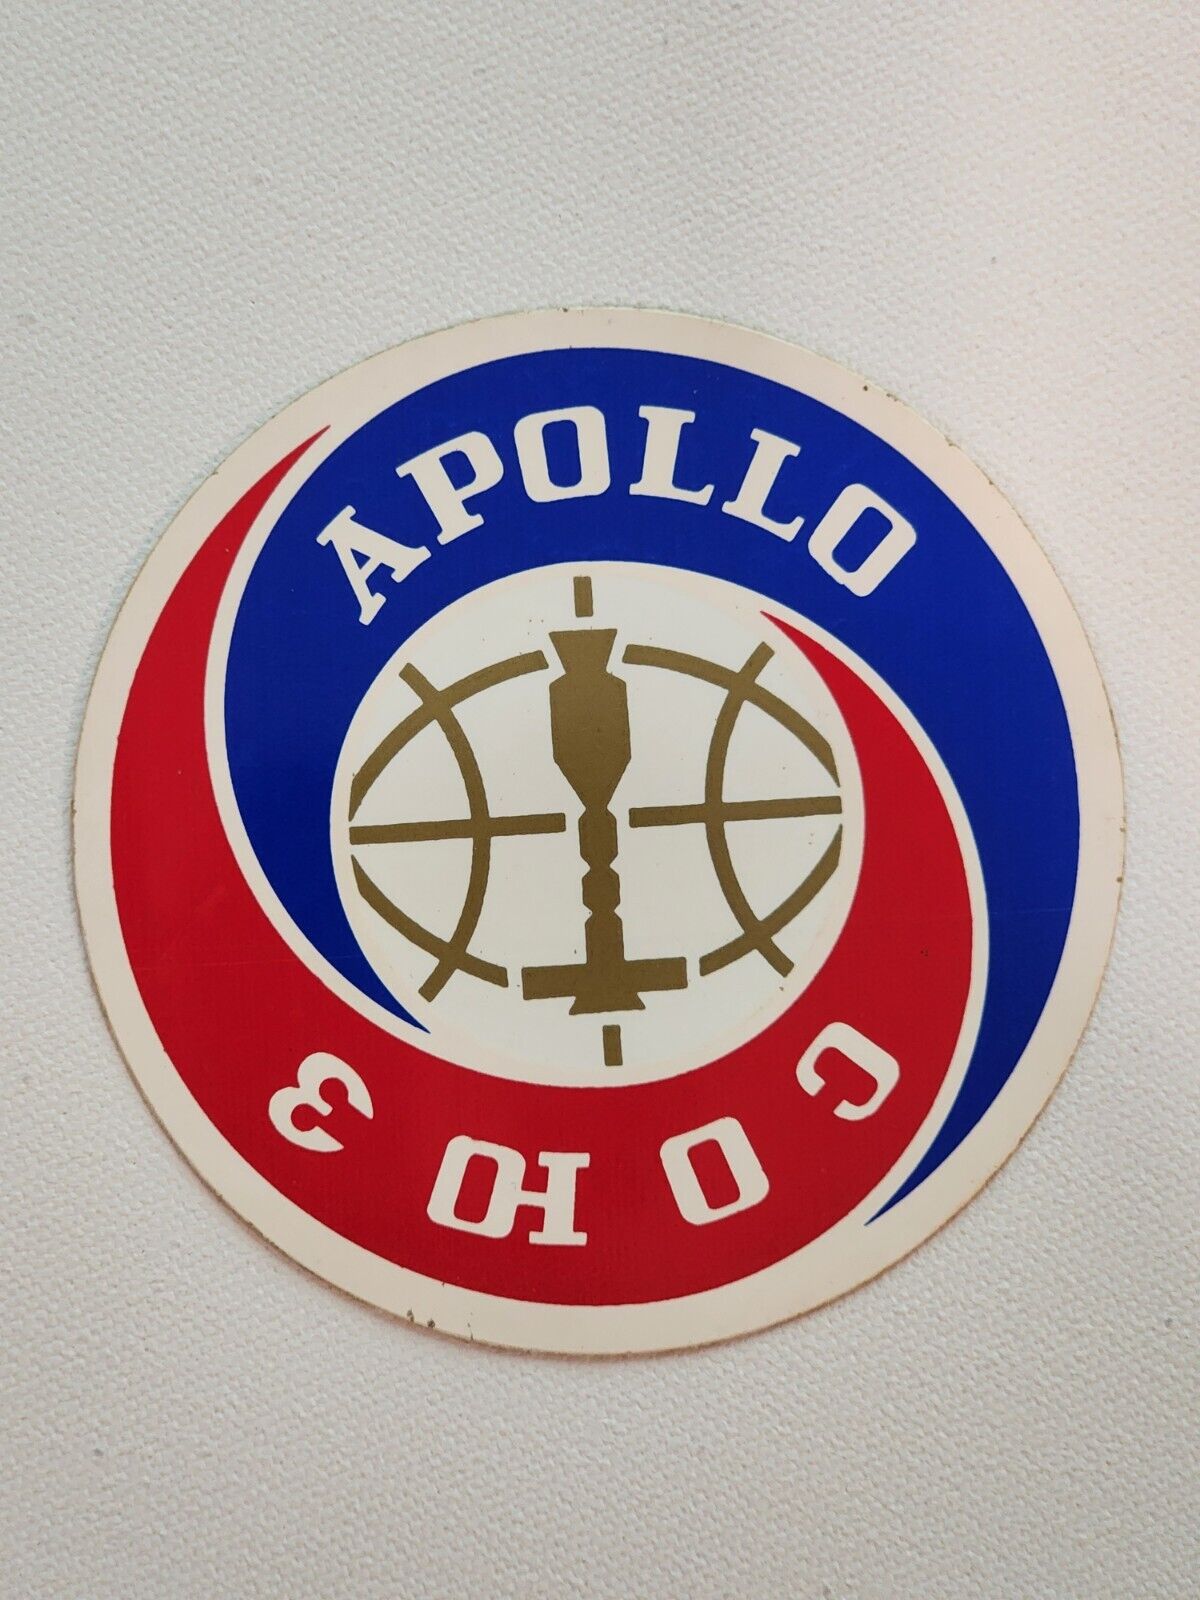 Original 1975 Apollo Soyuz Test Project ASTP Space Mission Soviet & NASA Sticker